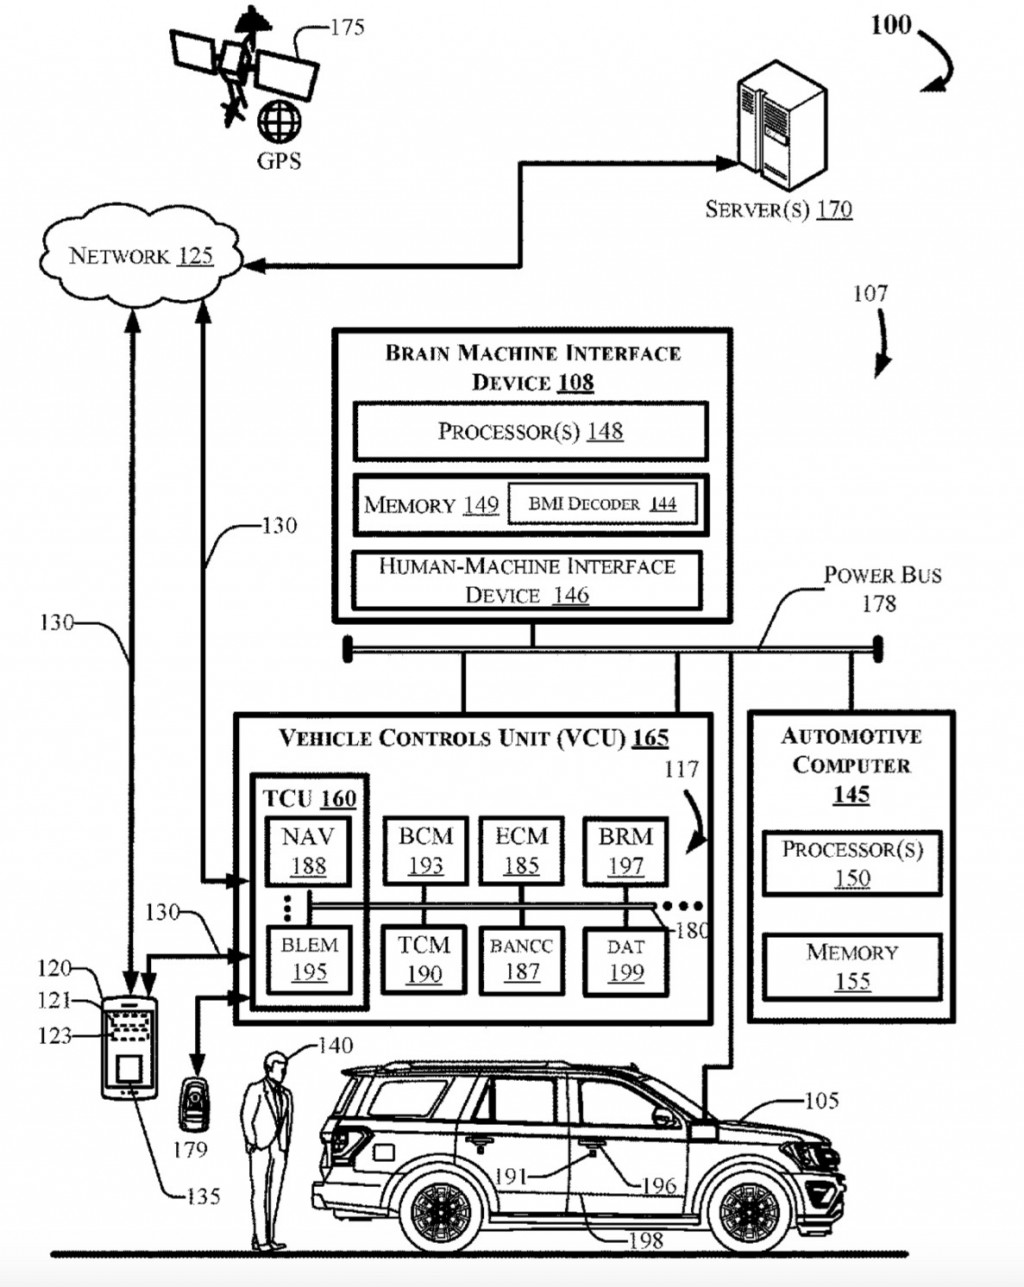 Ford brain machine interface patent image